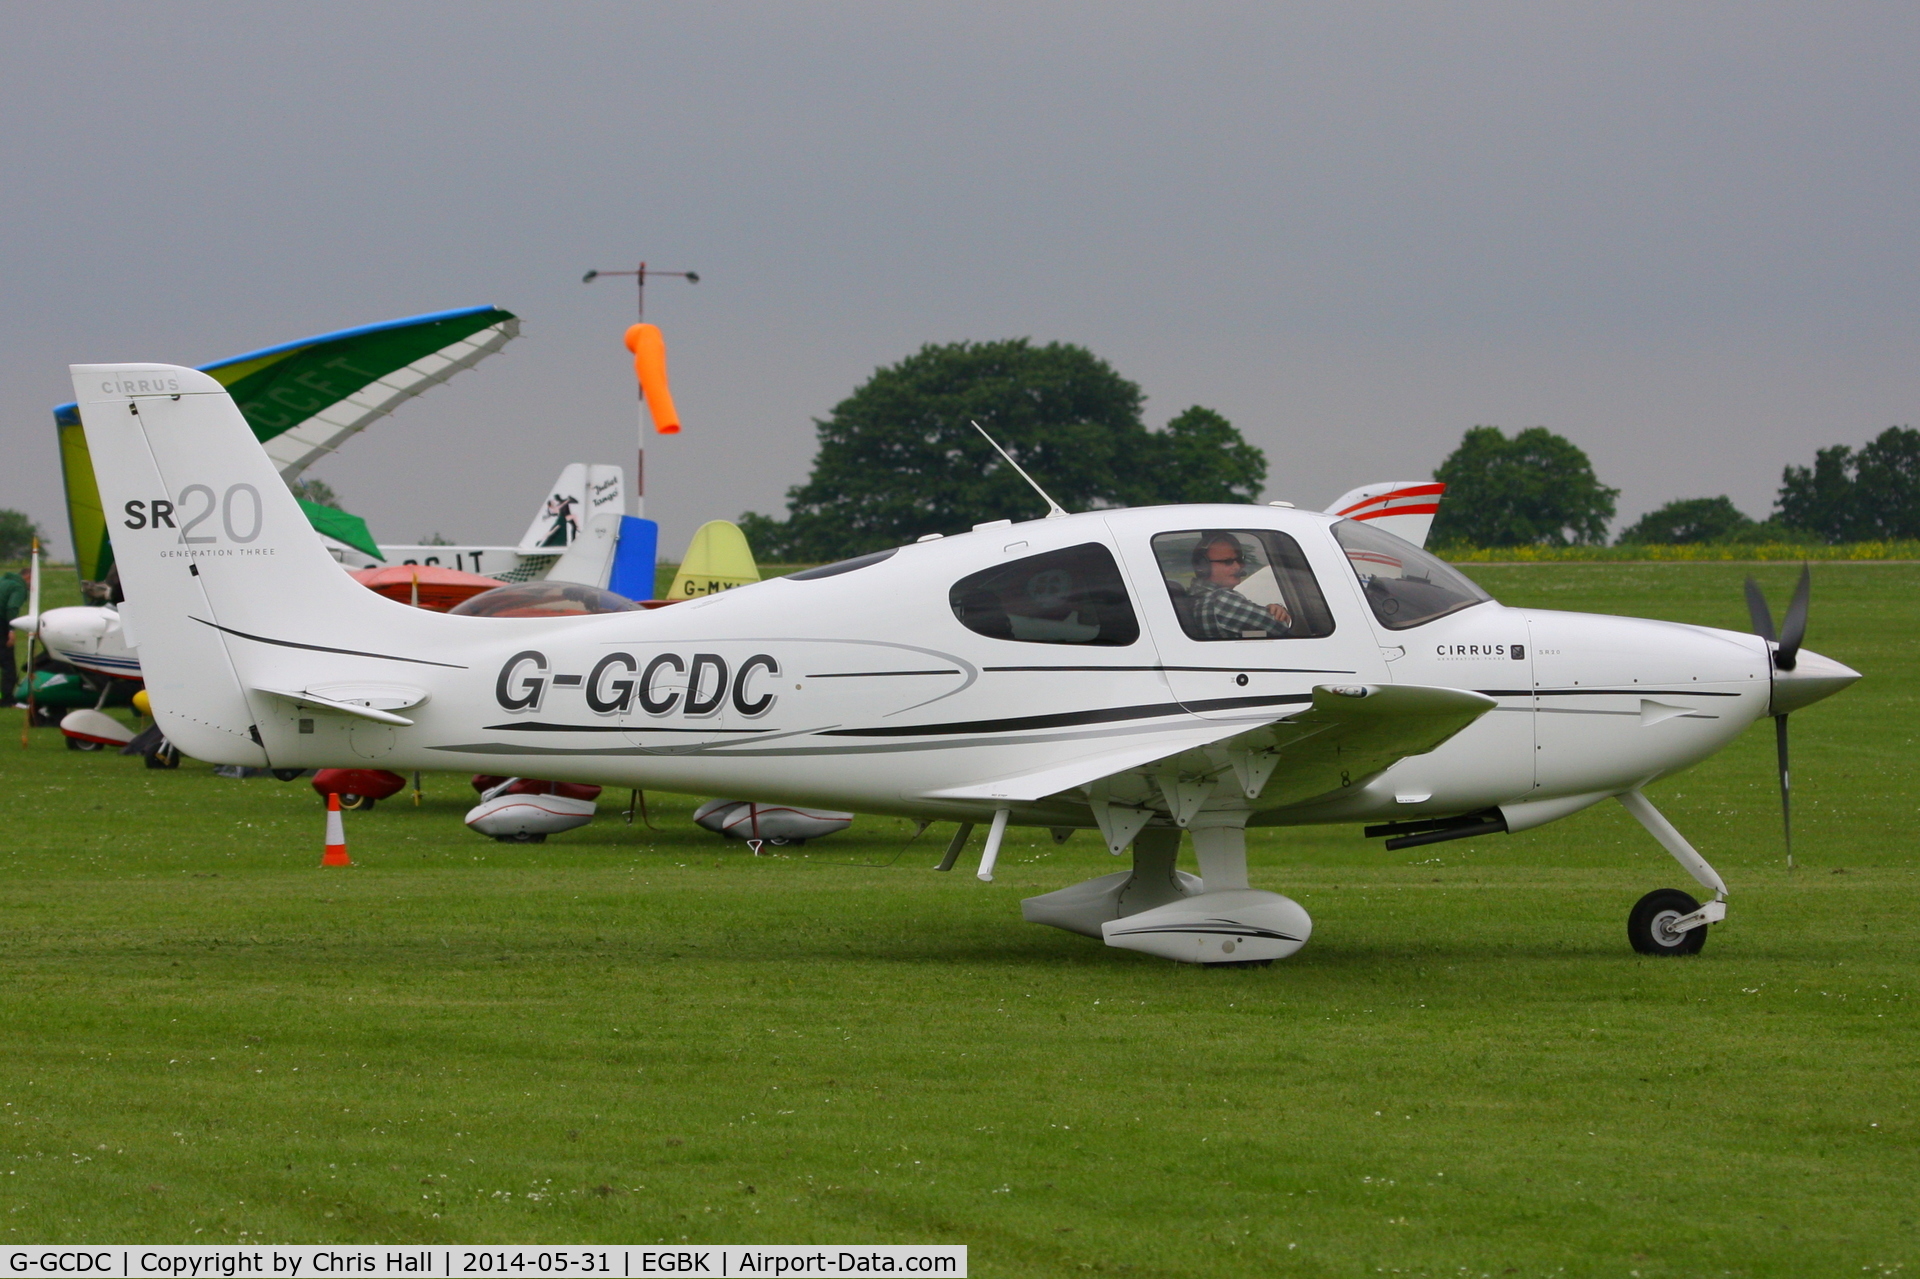 G-GCDC, 2008 Cirrus SR20 G3 C/N 2008, at AeroExpo 2014